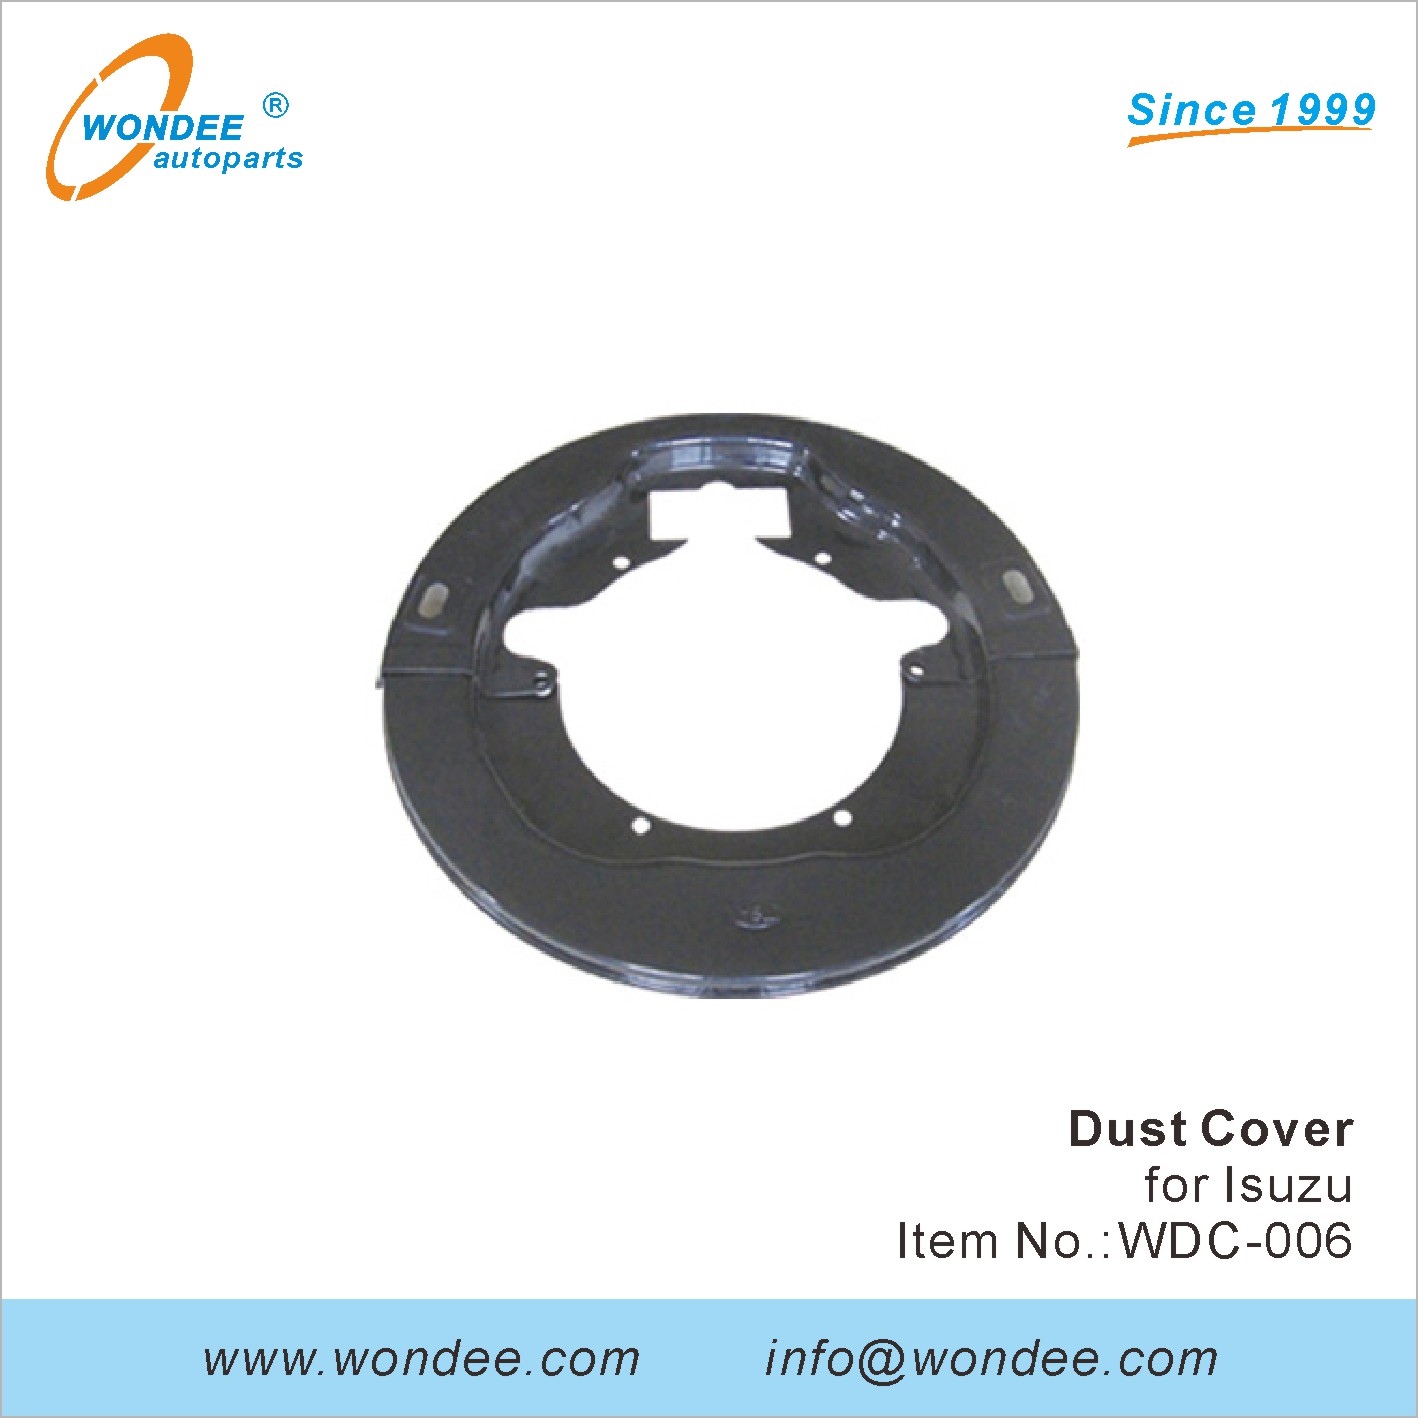 WONDEE dust cover (6)